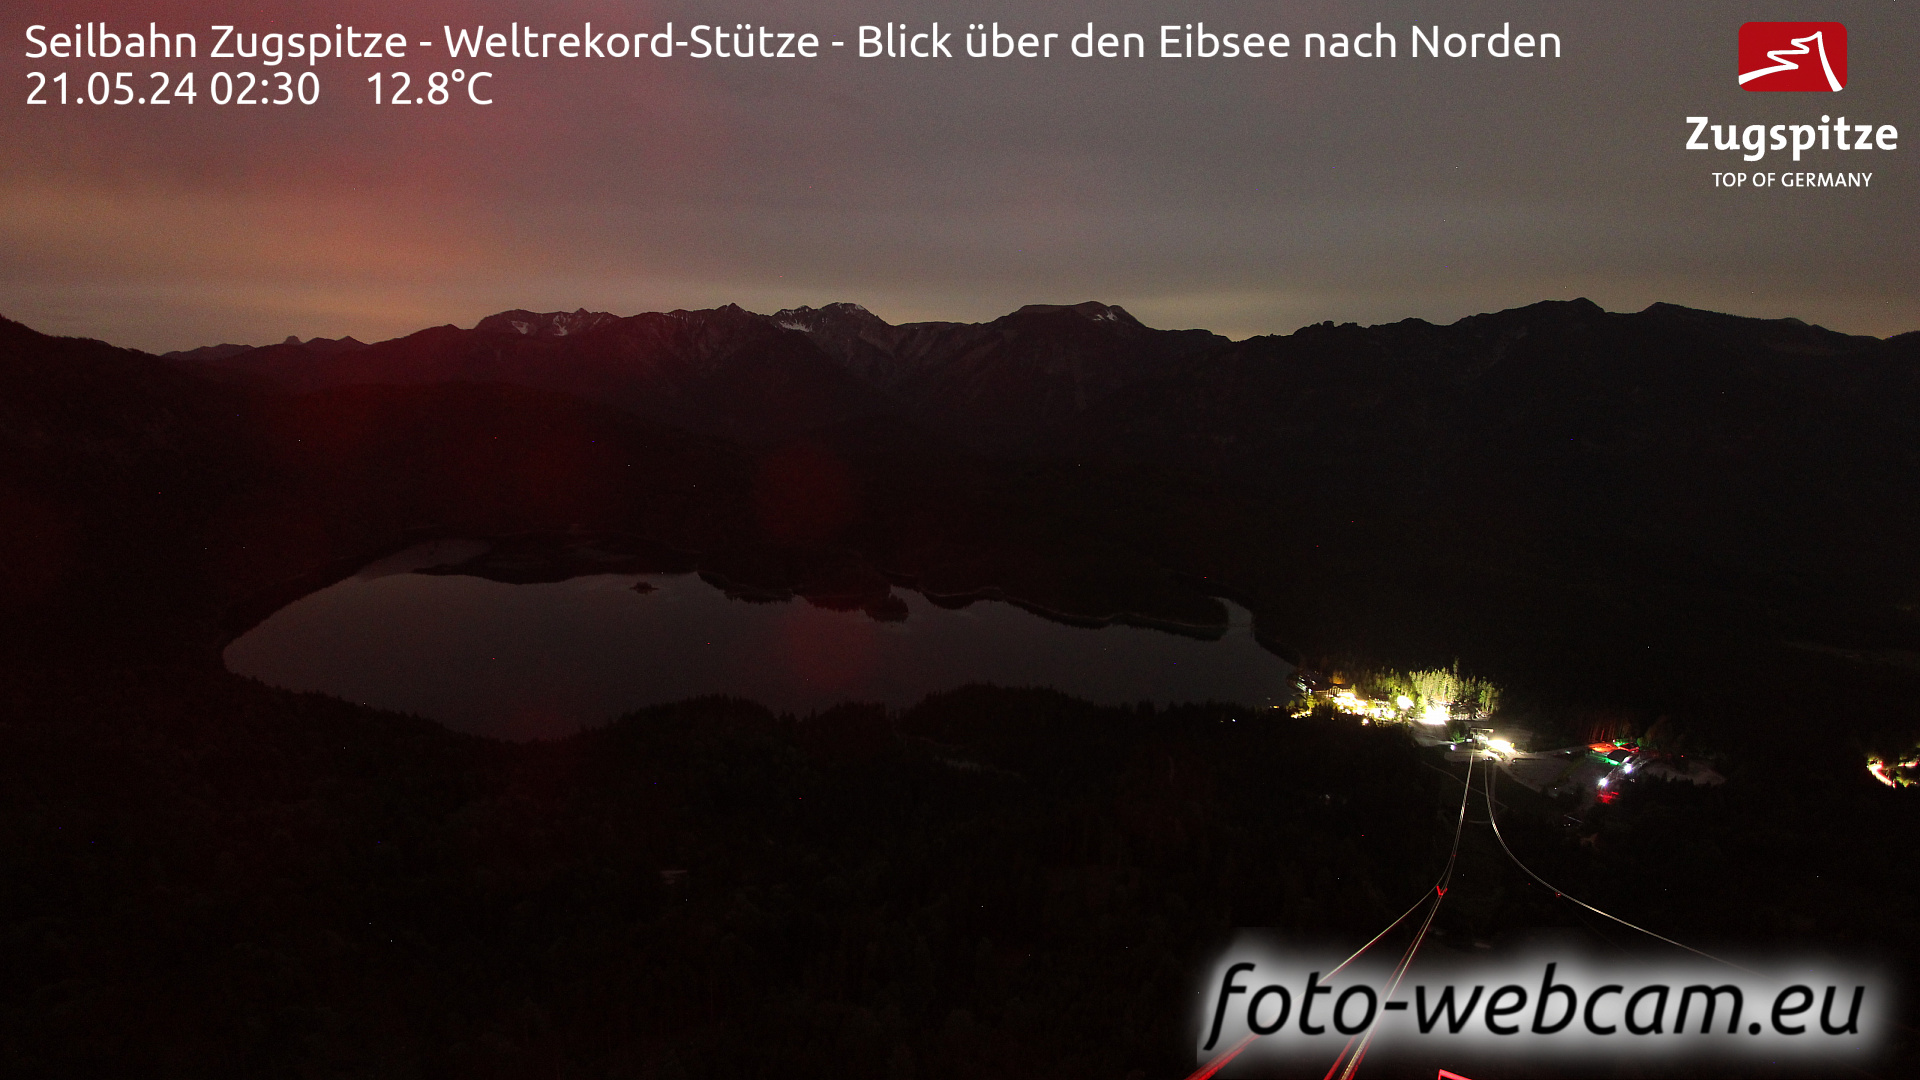 Zugspitze Mo. 02:49